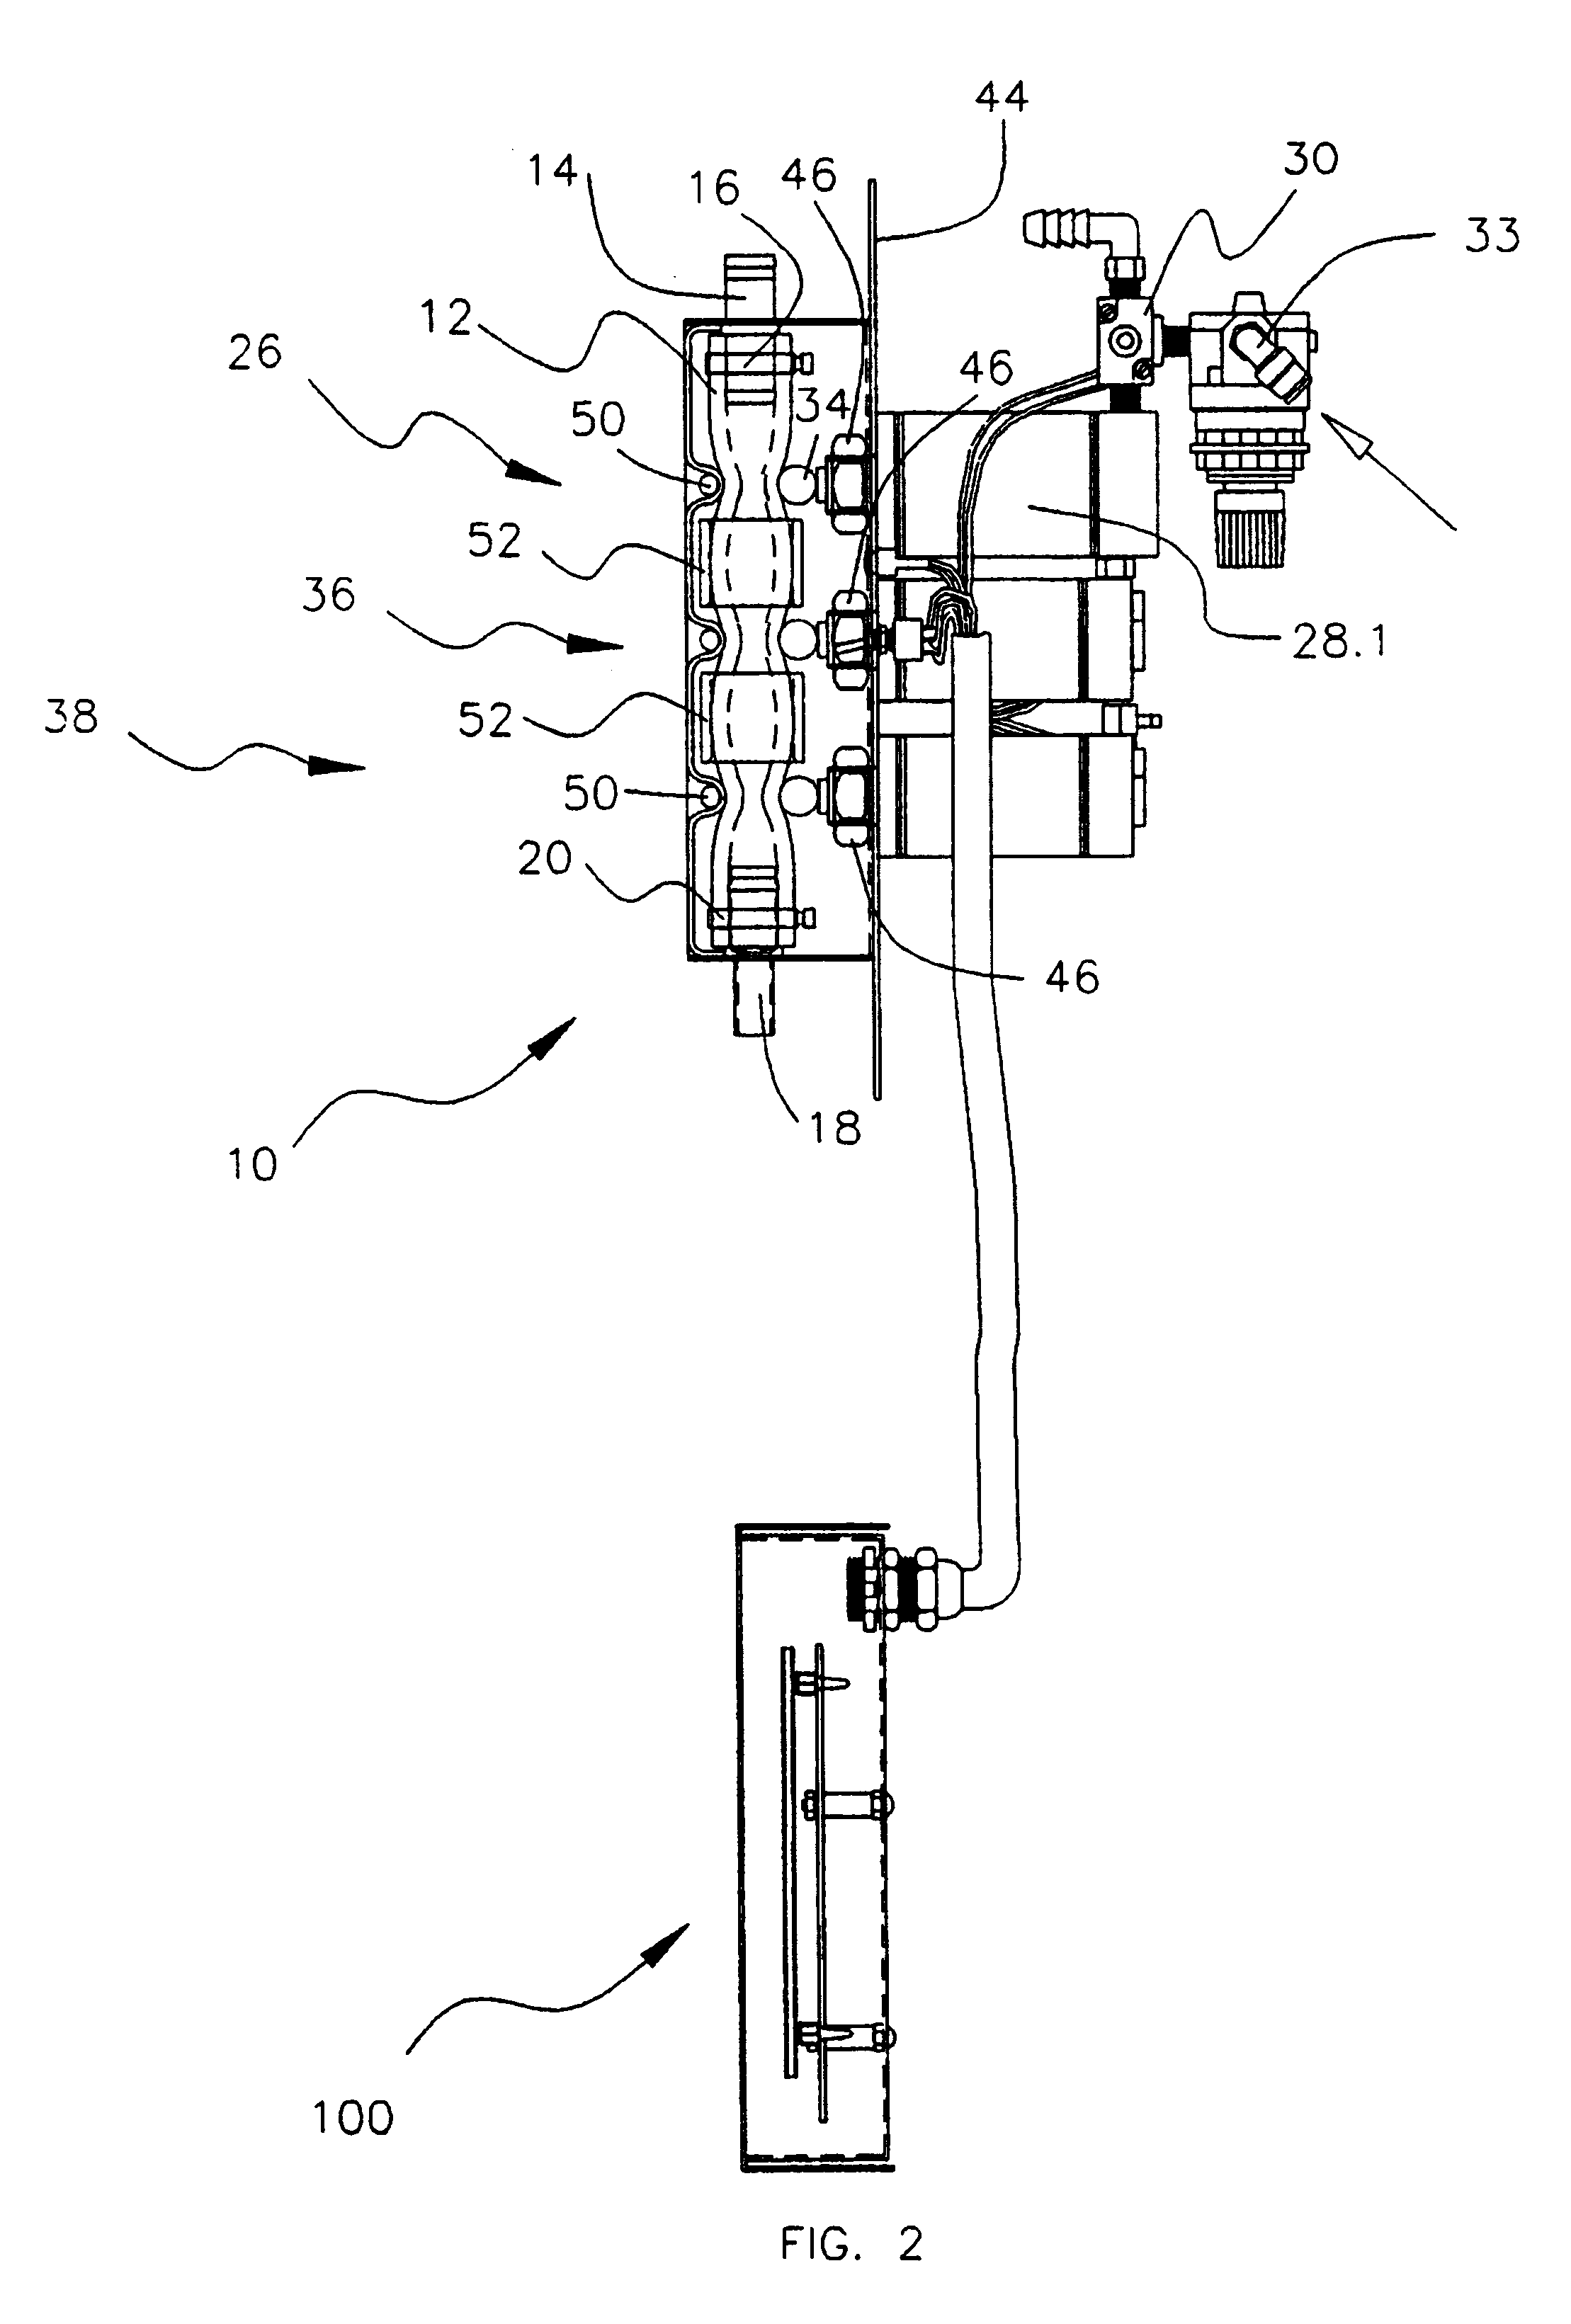 Linear peristaltic pump